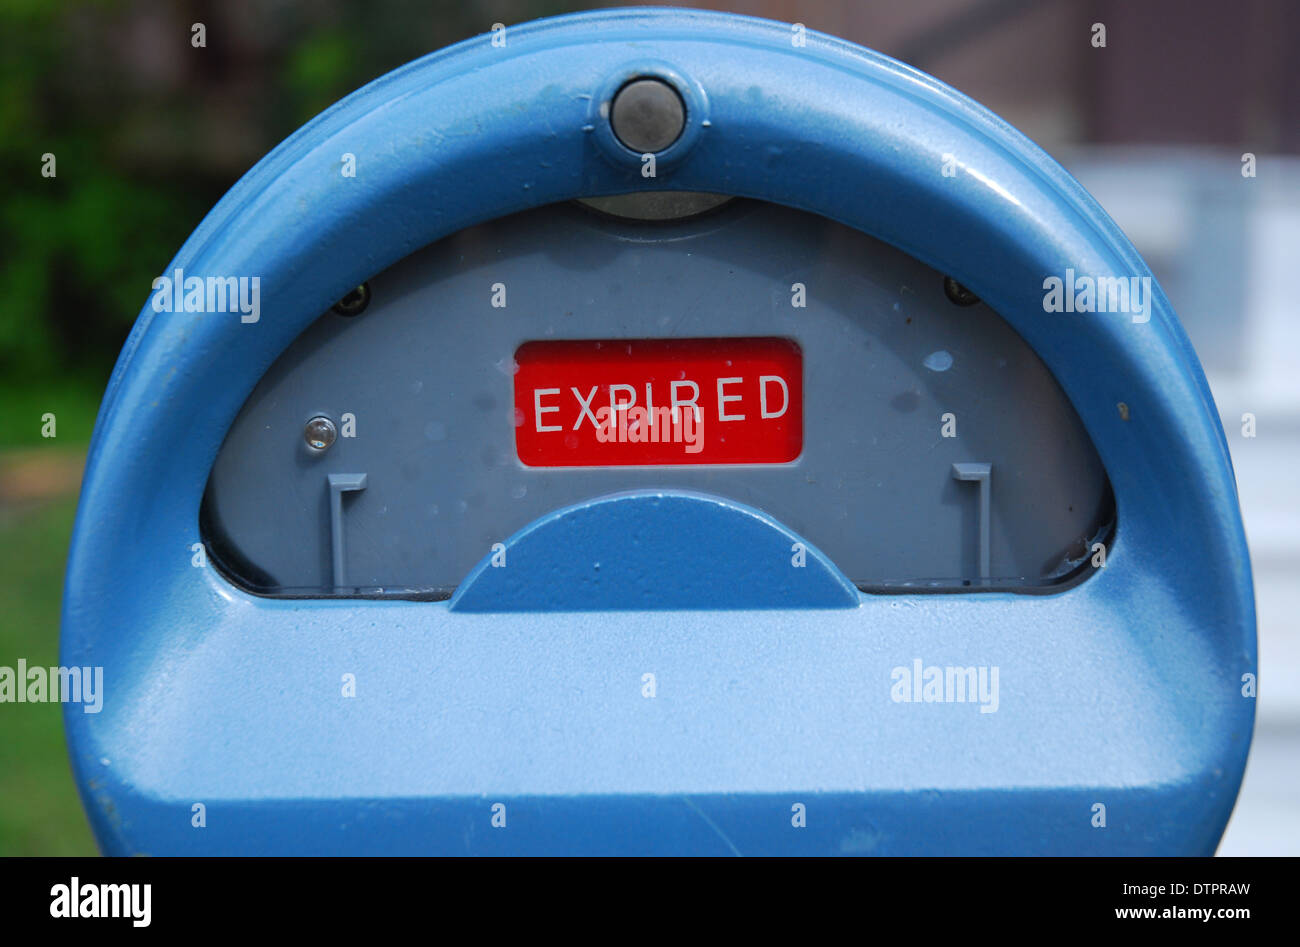 Expired parking meter Stock Photo